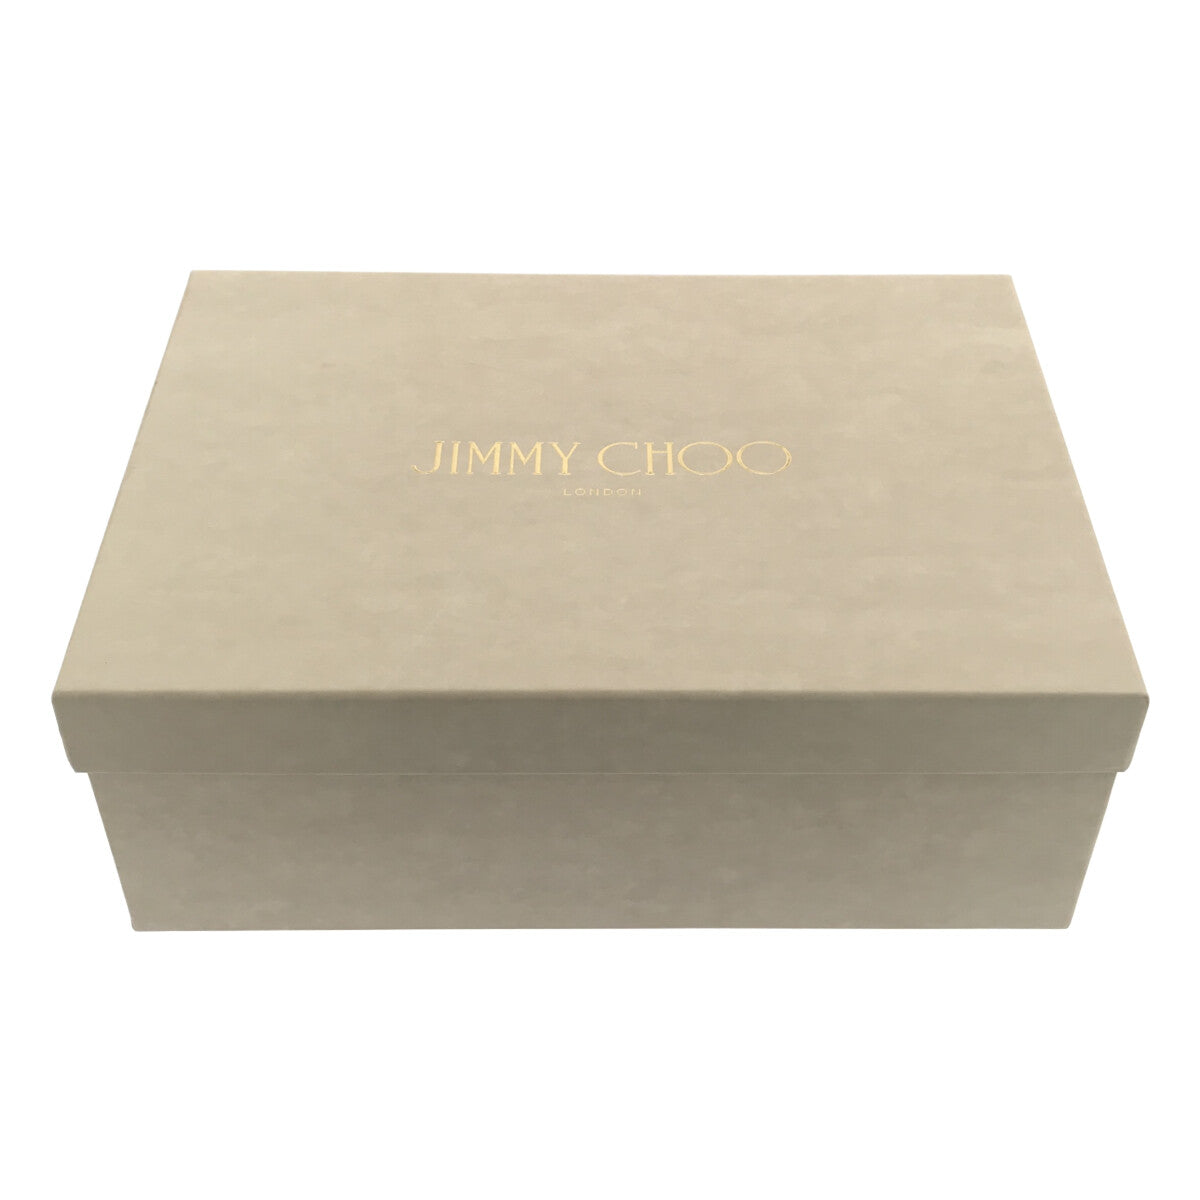 JIMMY CHOO / ジミーチュウ | 金具ロゴ パテントレザー ポインテッドトゥ パンプス | 38 |